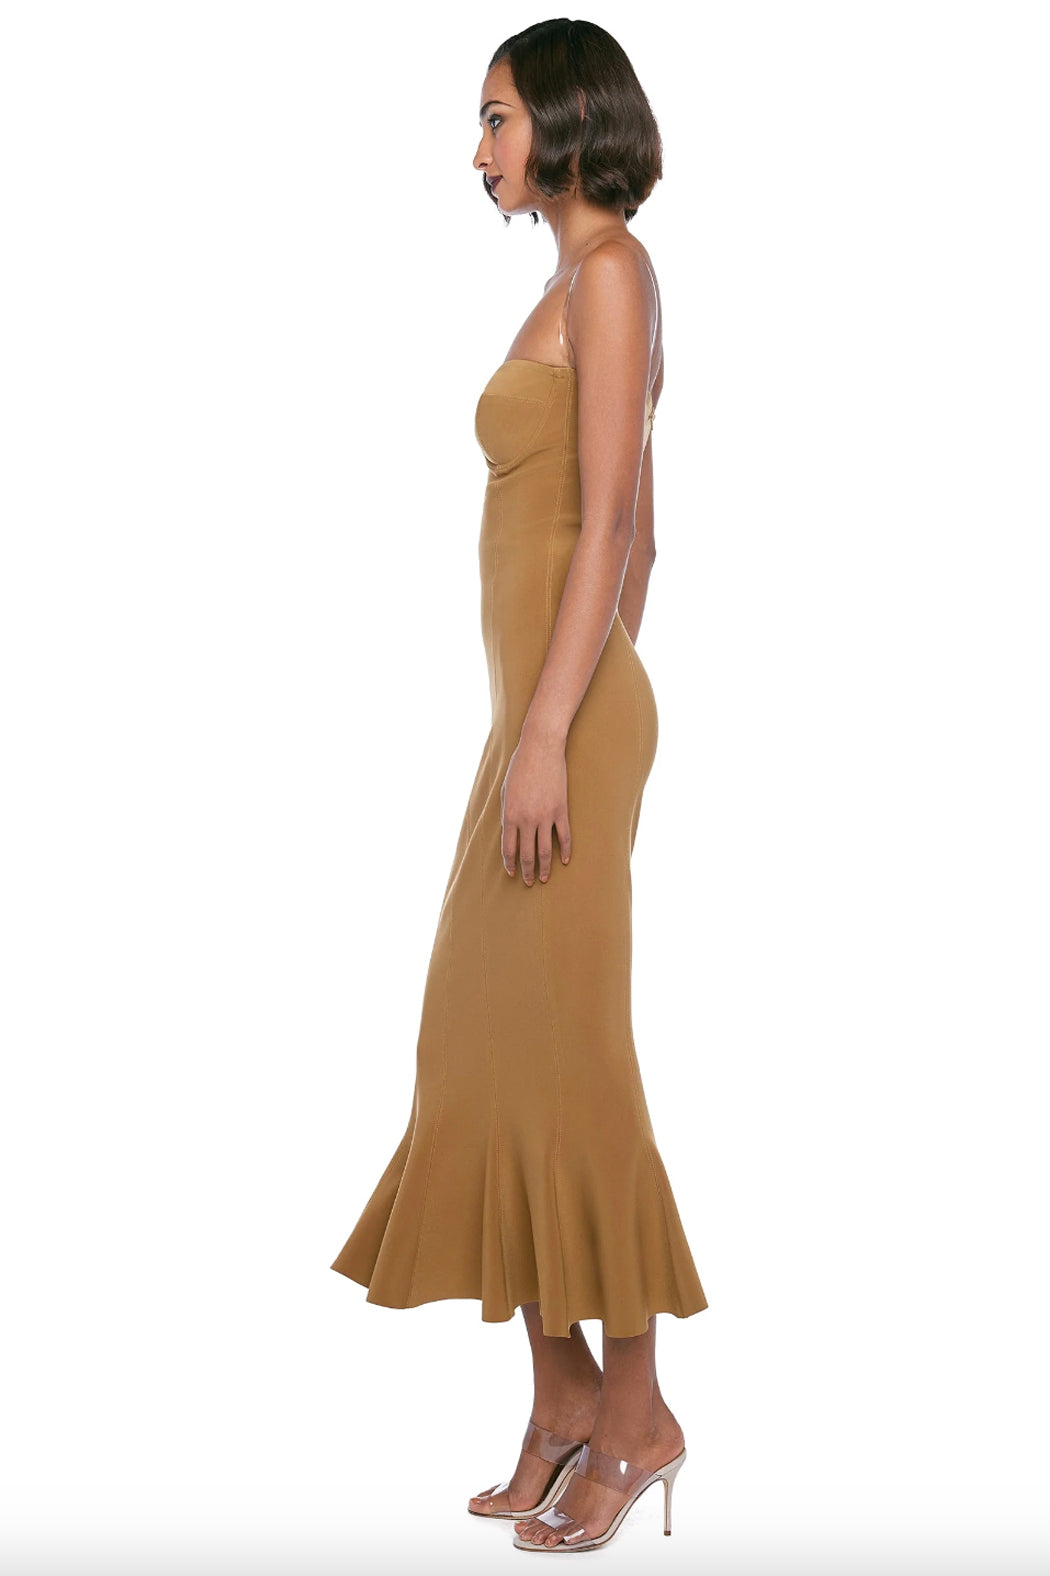 The Norma Kamali Diana Dress Review - KatWalkSF